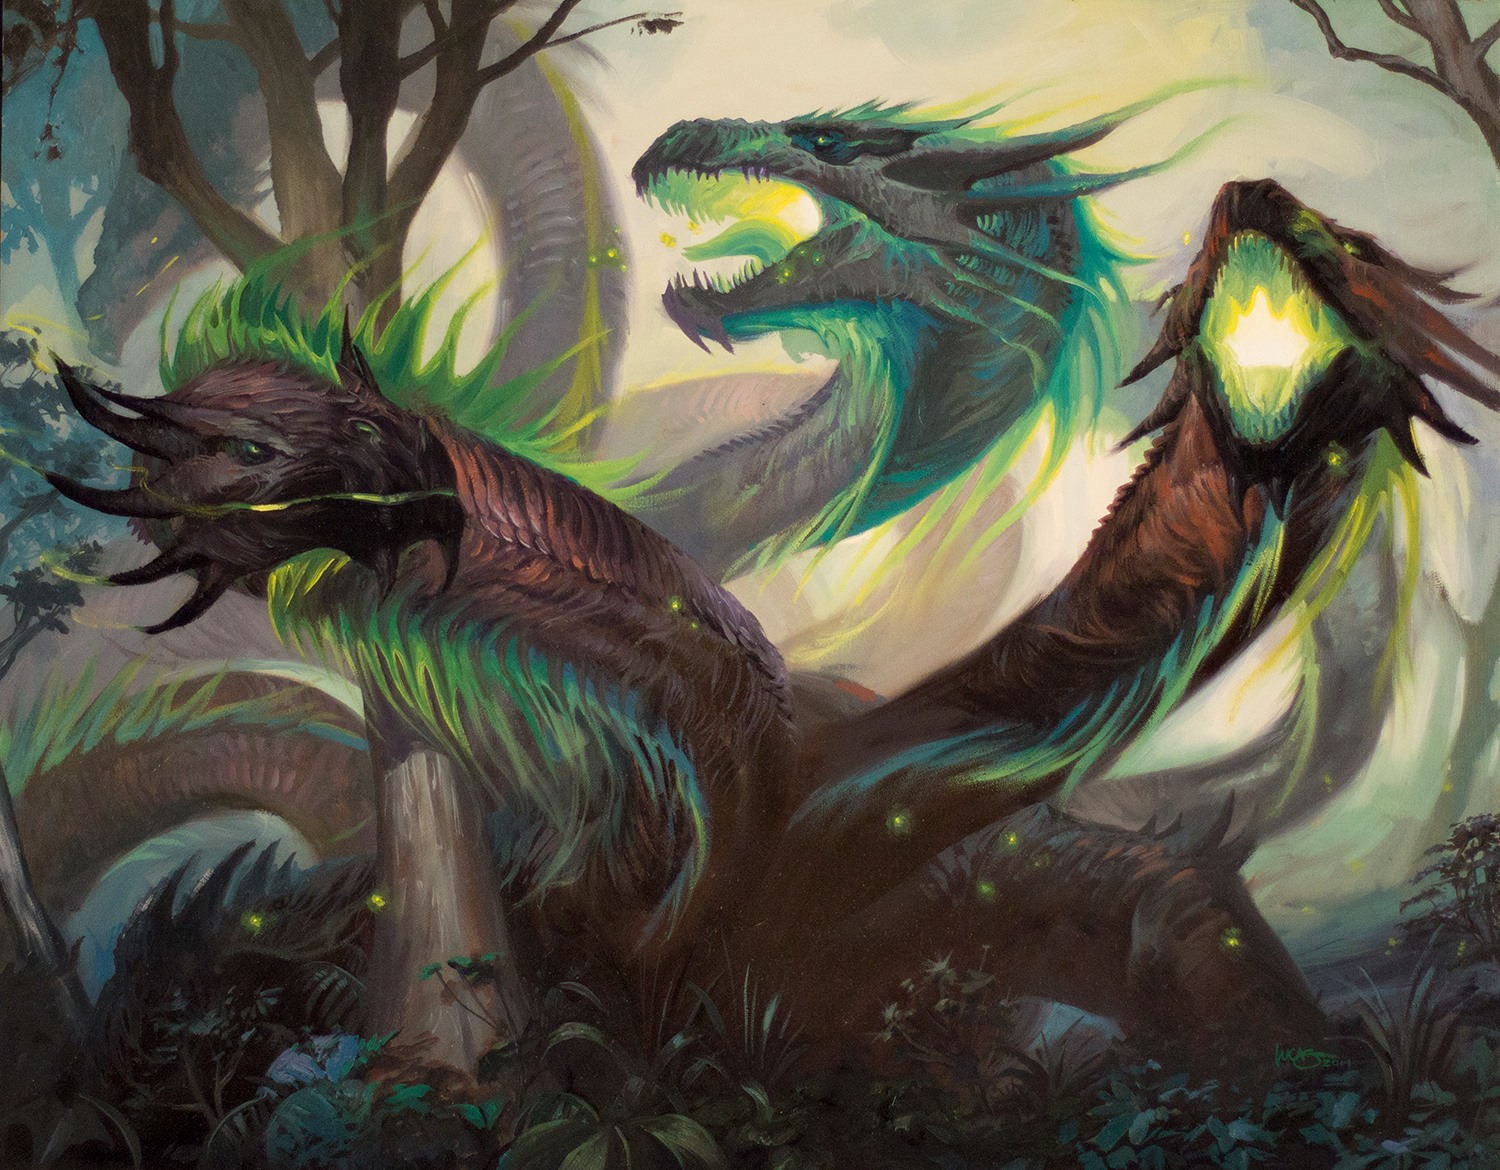 MtG Art: Managorger Hydra from Magic Origins Set by Lucas Graciano